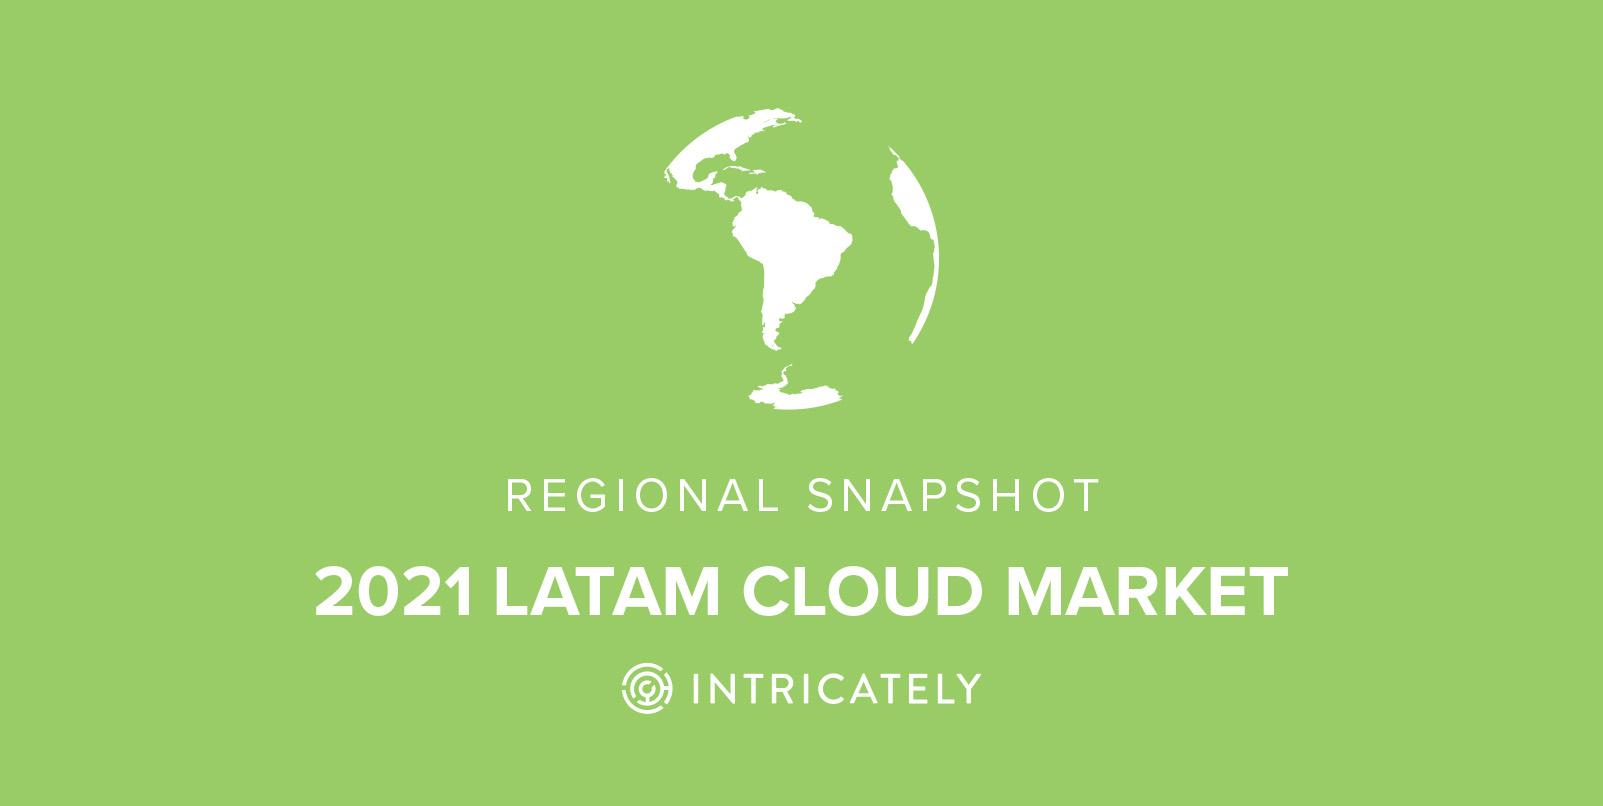 2021 latam cloud market regional snapshot